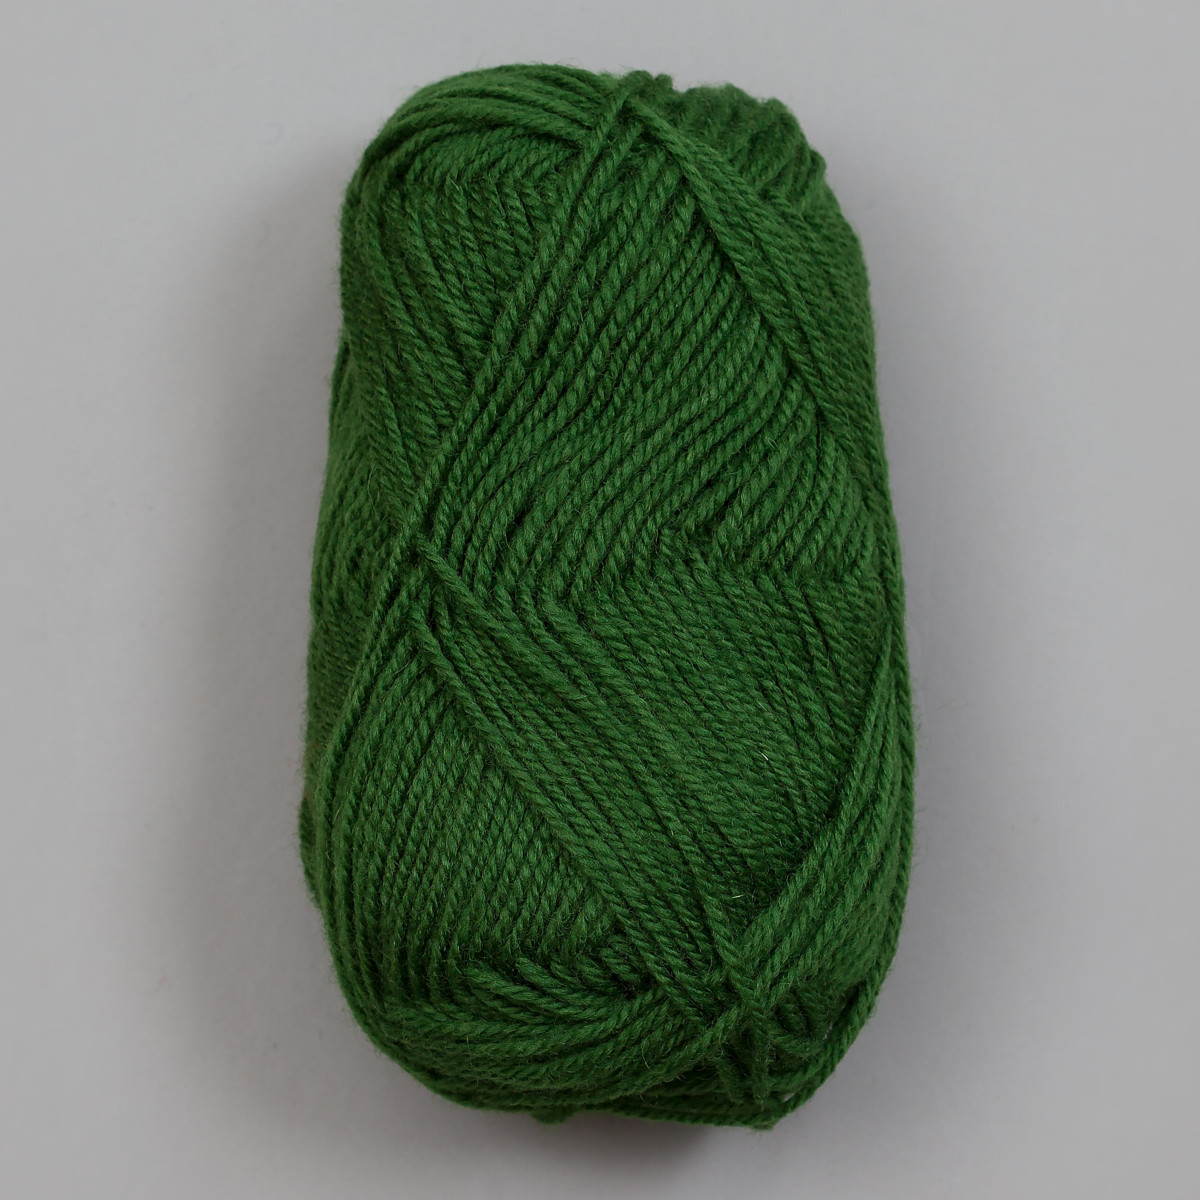 3-tråds strikkegarn - Grønn (145)